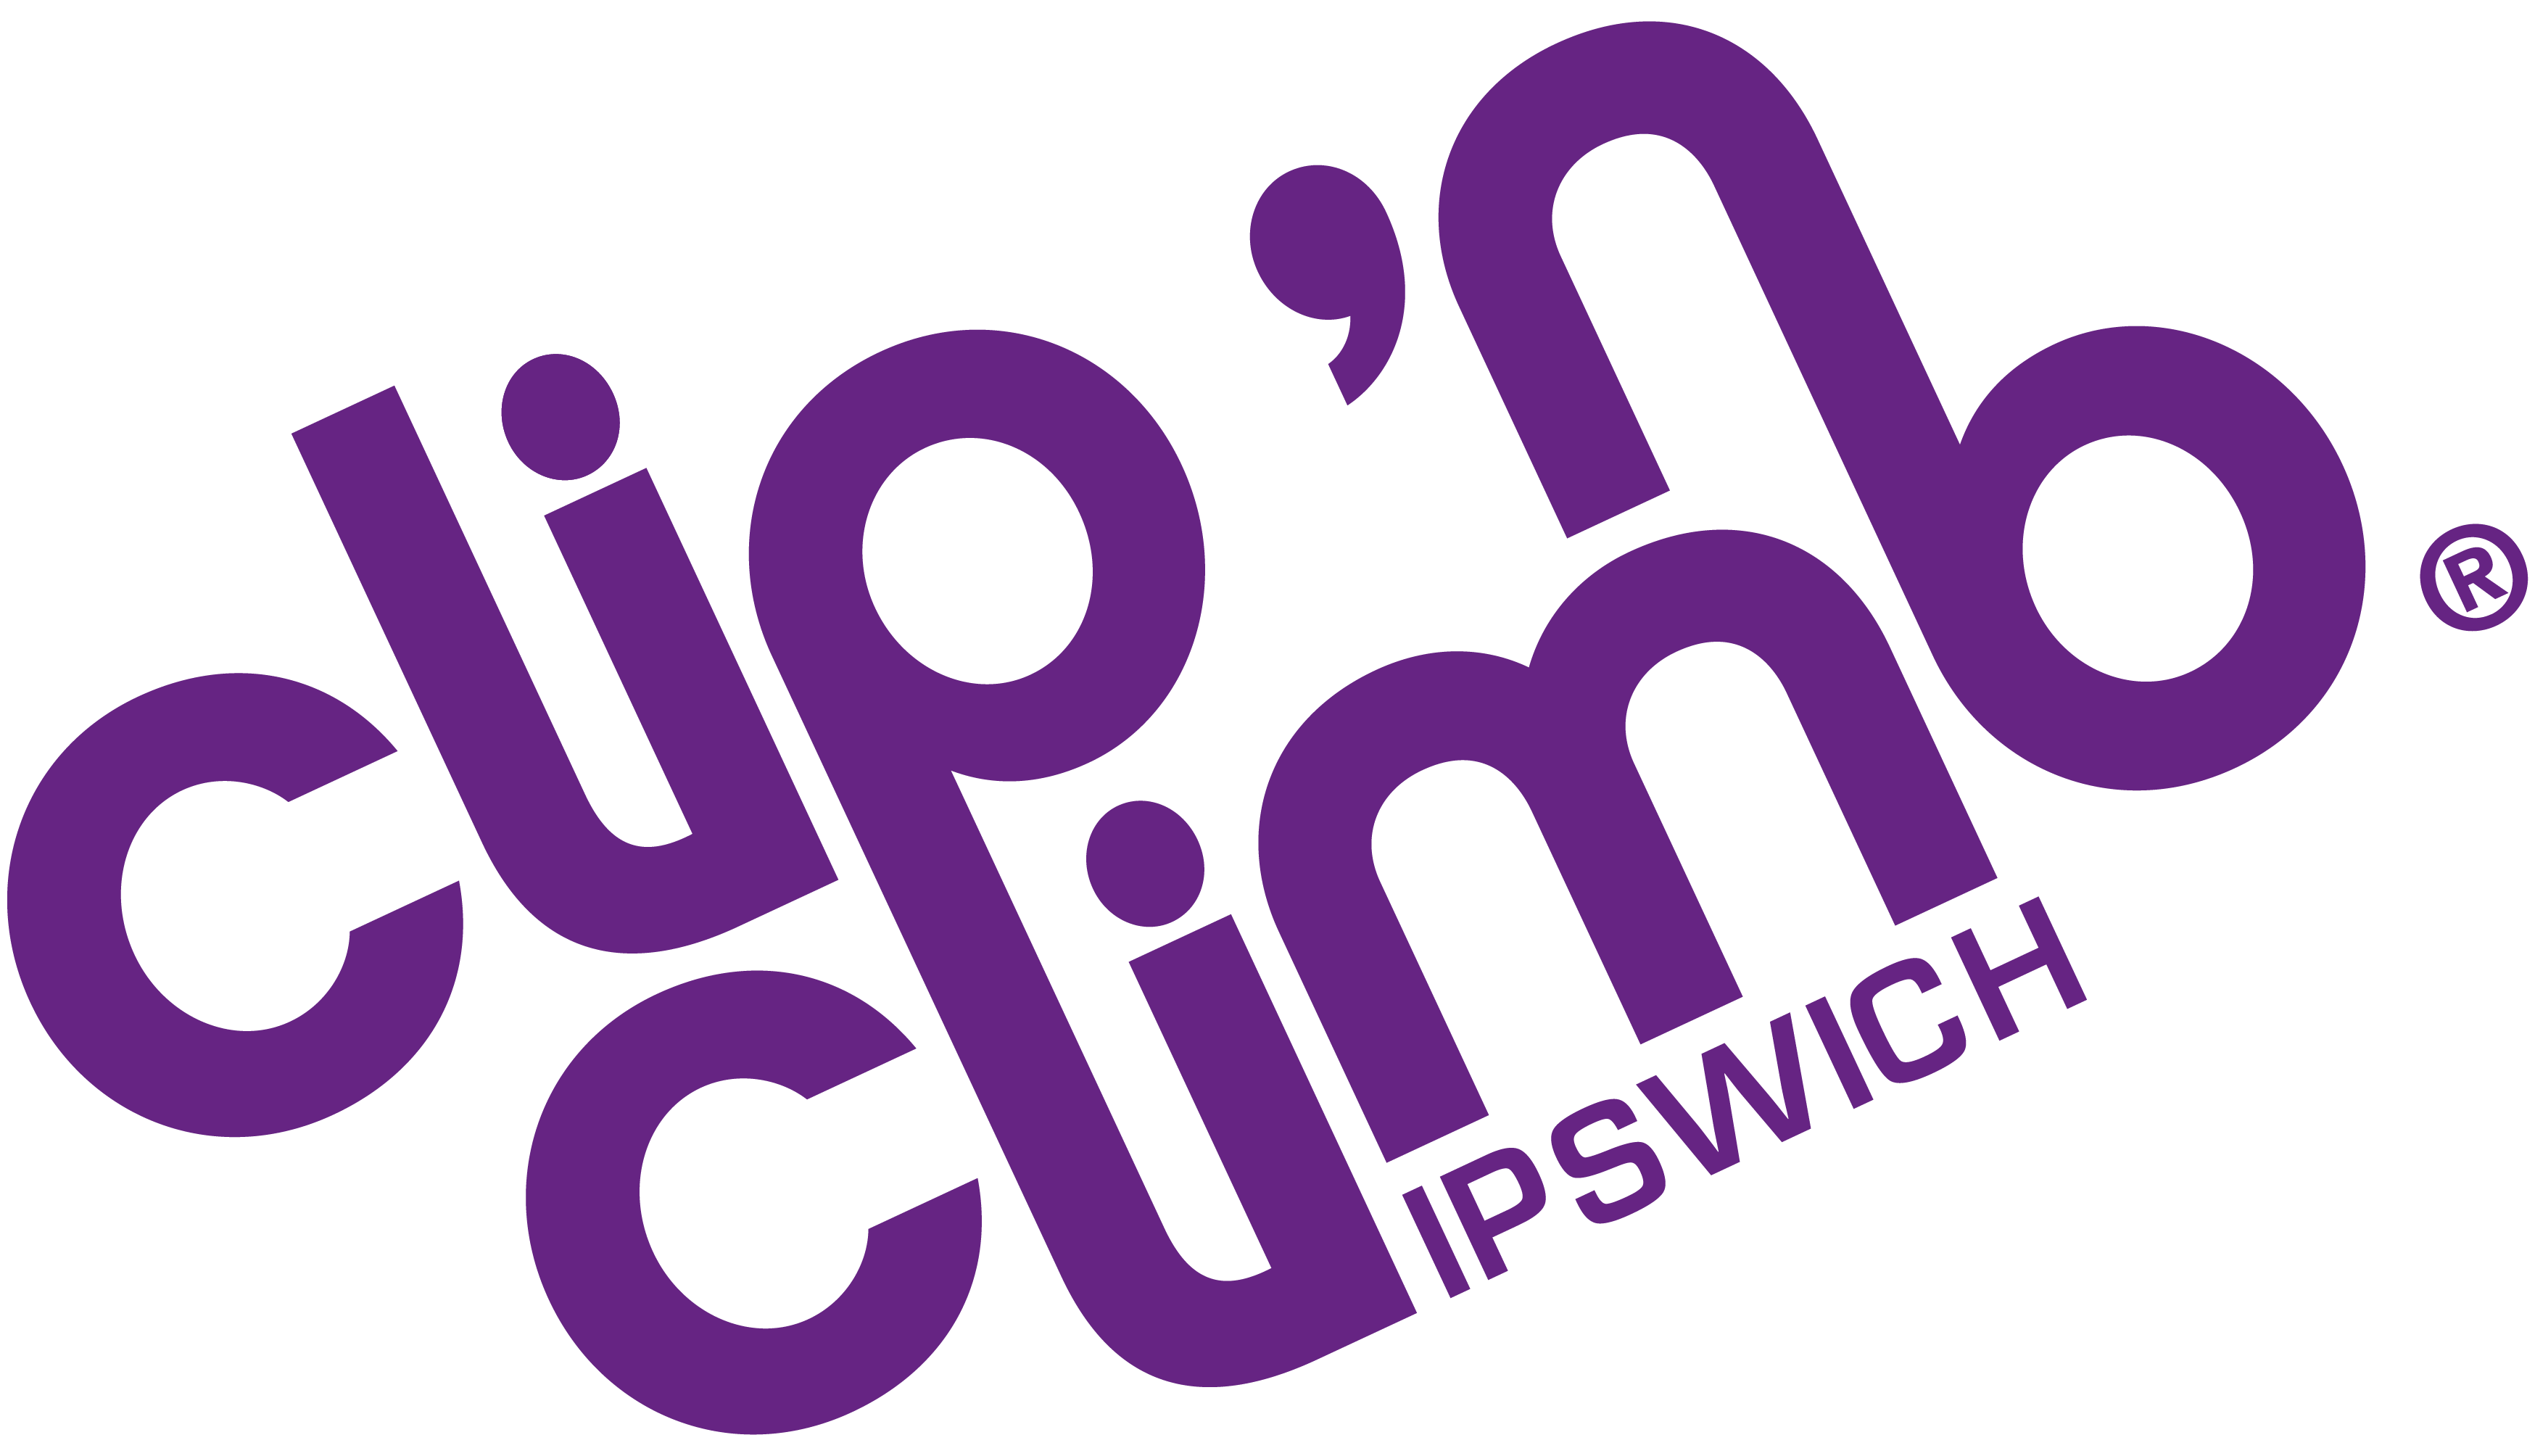 Clip 'n Climb Ipswich's logo